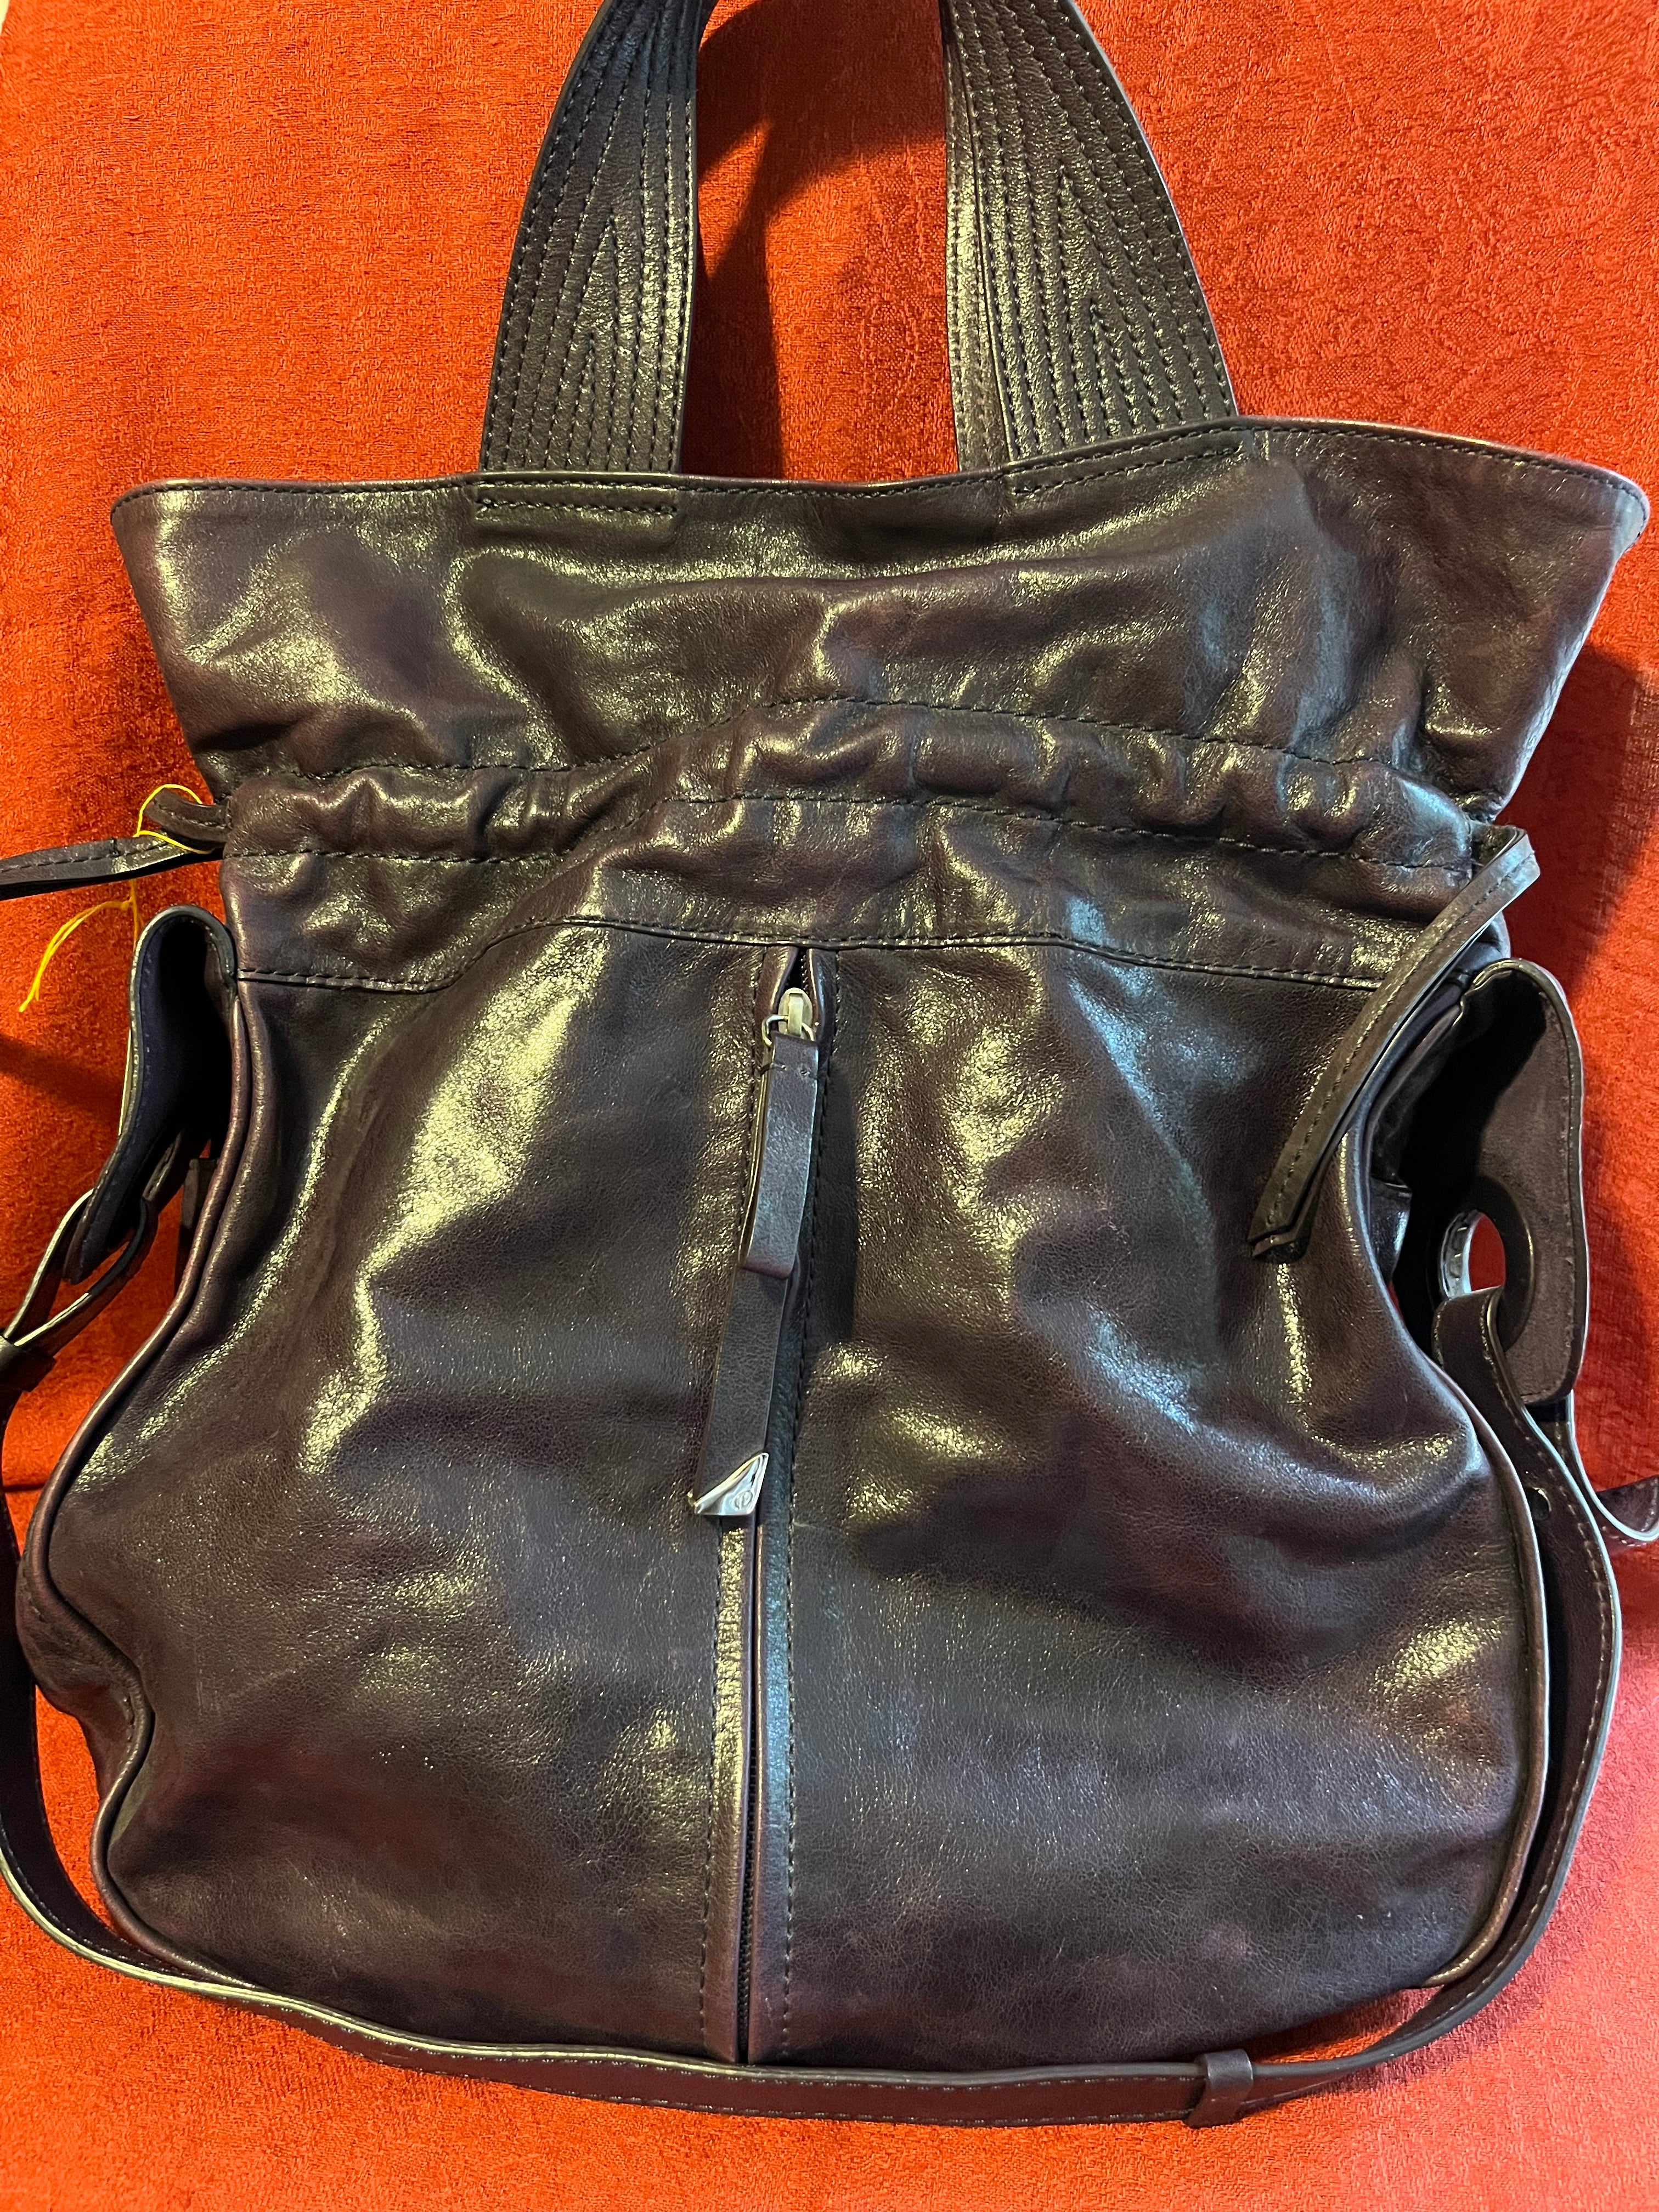 Francesco biasia purse navy blue leather with... - Depop